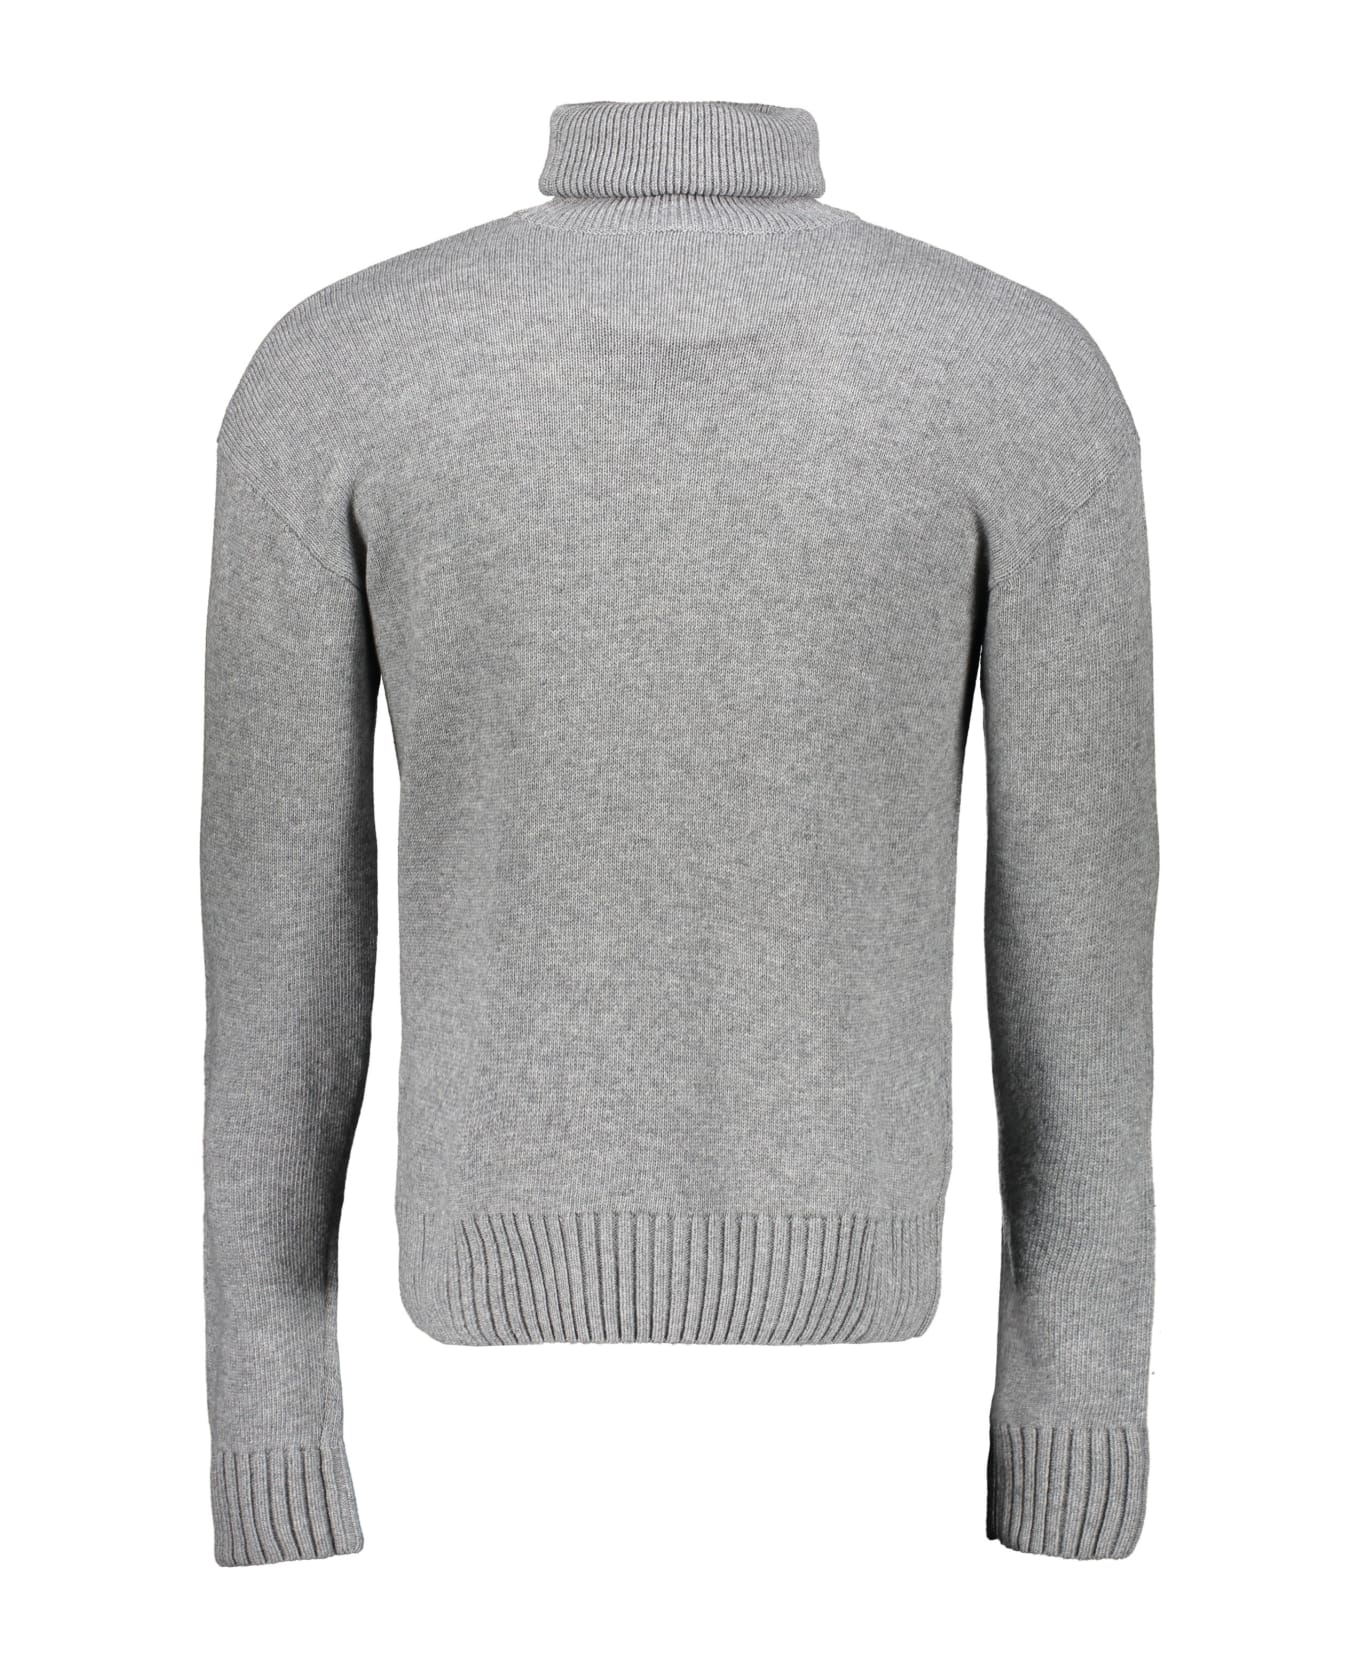 Off-White Turtleneck Sweater - grey